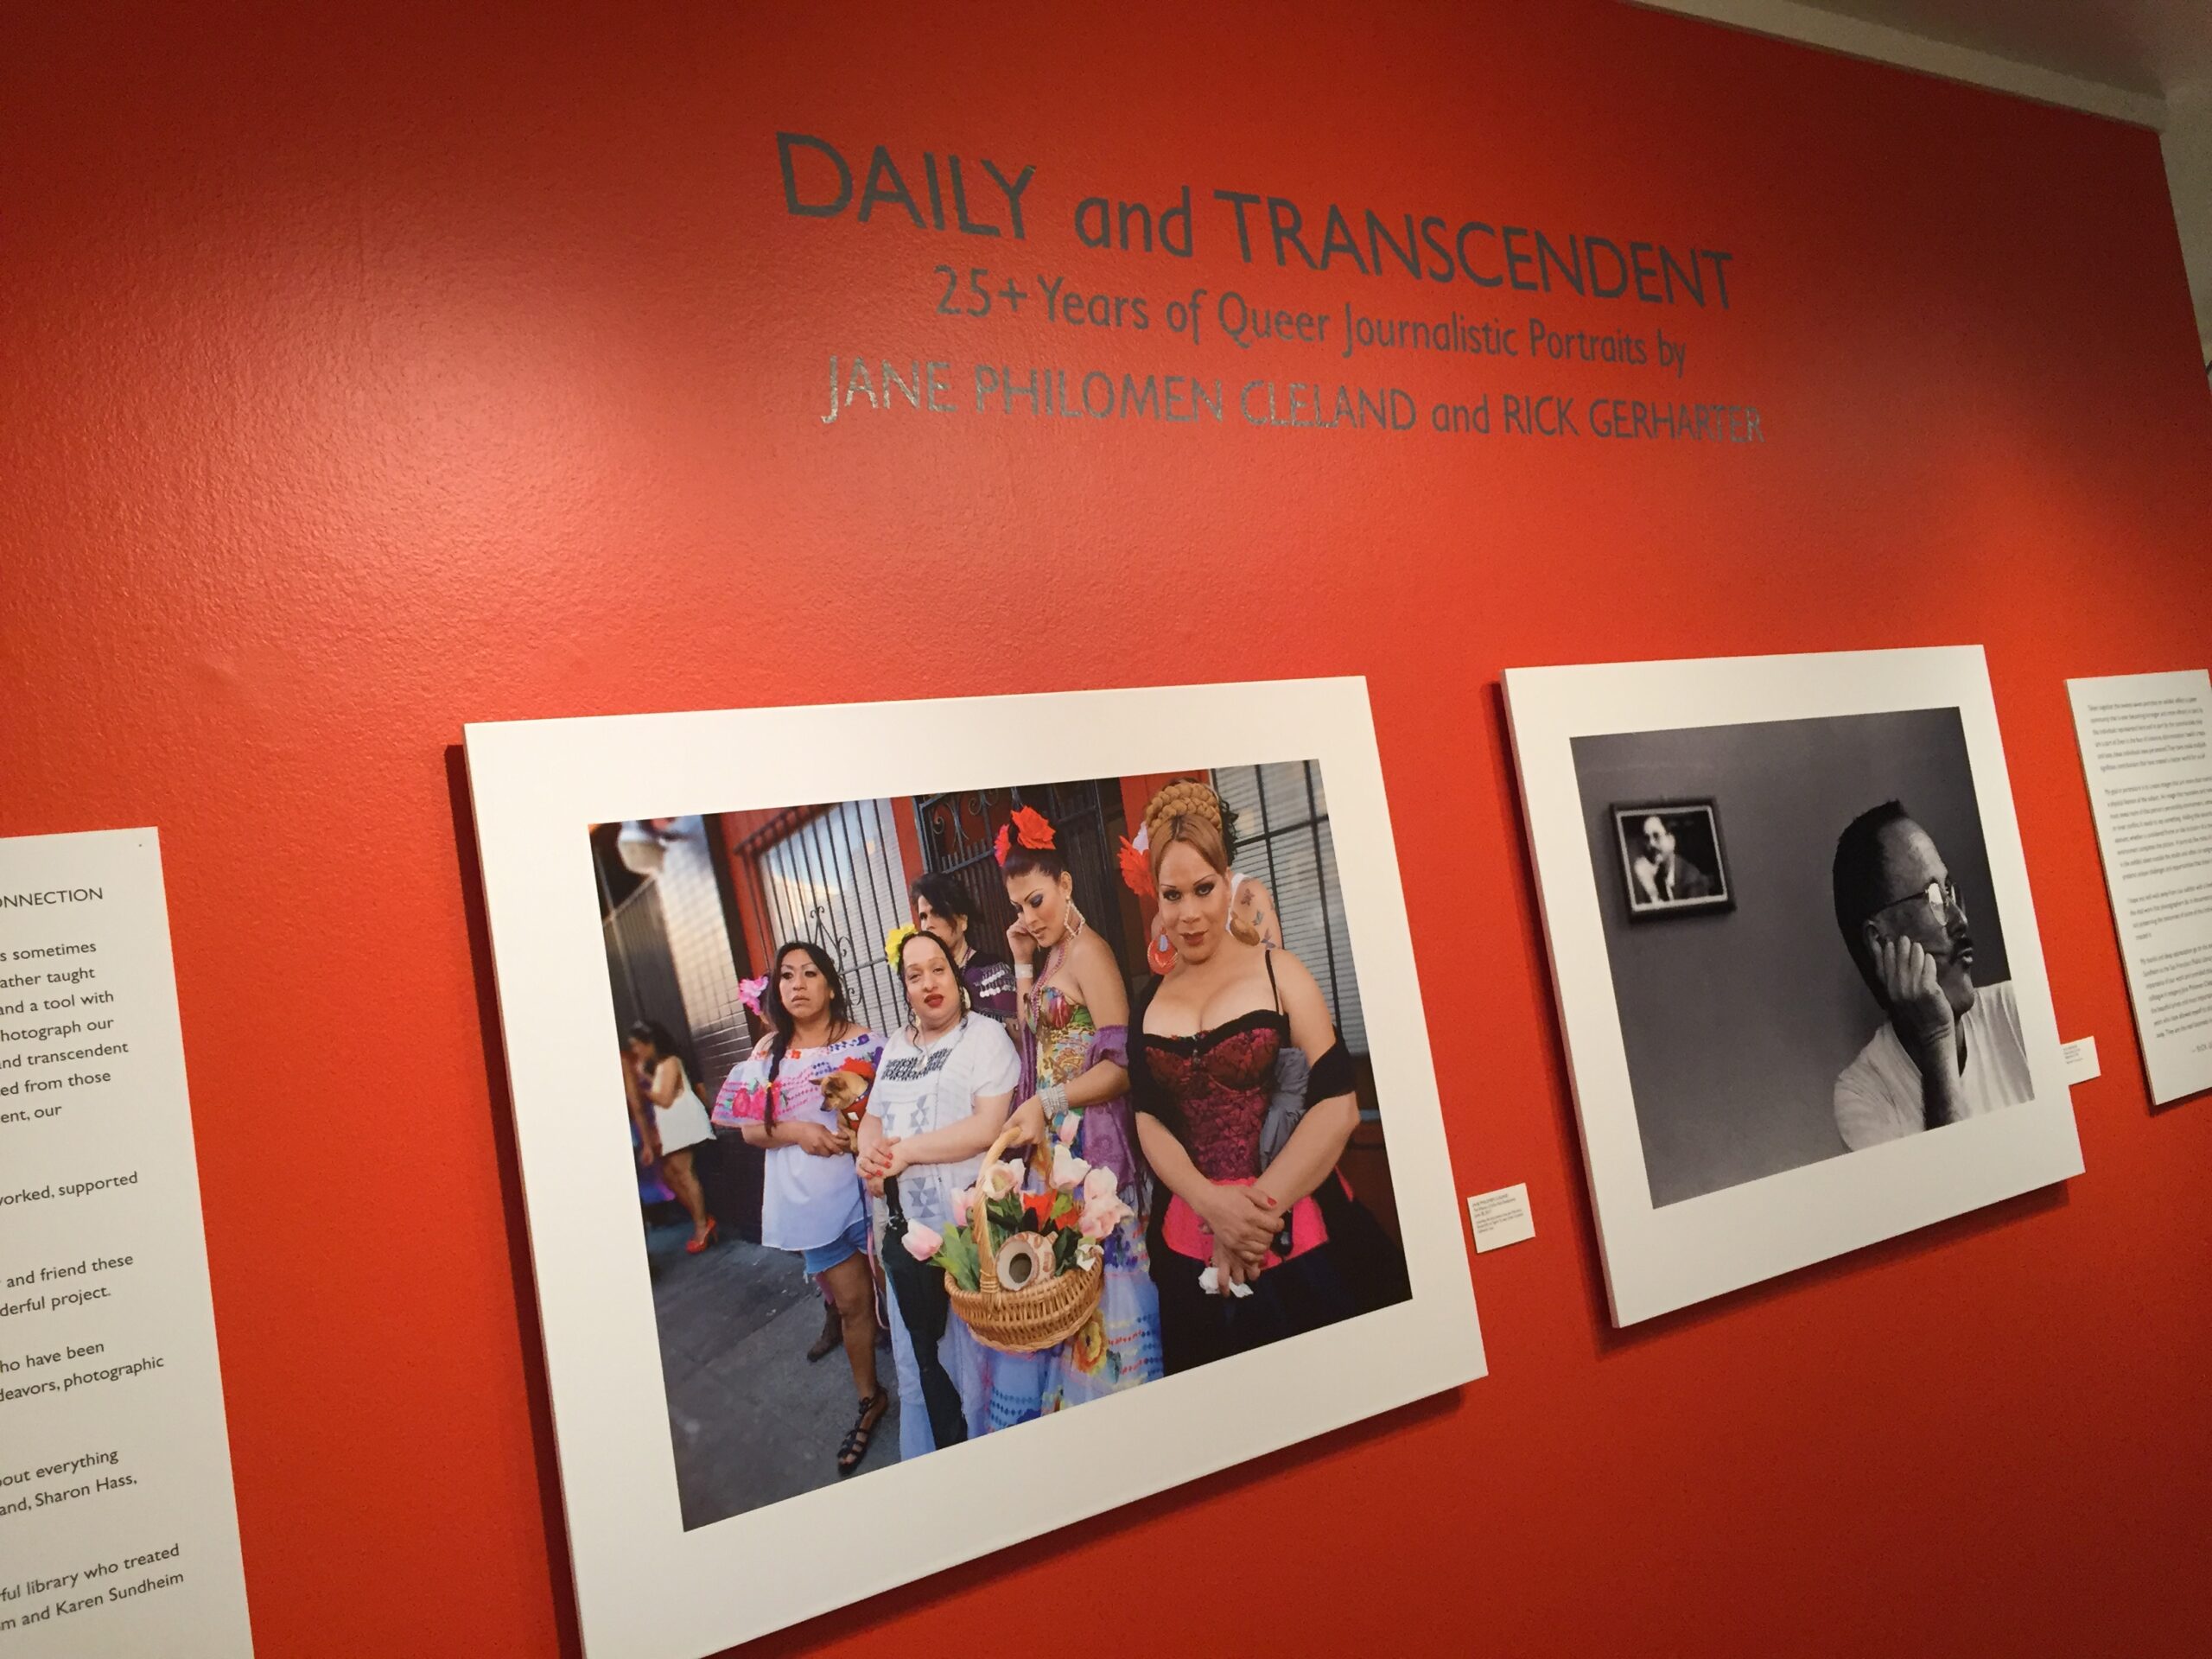 Daily and Transcendent: 25+ years of Photojournalistic Portraits Exhibit, November 1 – January 3, San Francisco Public Library, Main Branch, Jewett Gallery, 100 Larkin Street, San Francisco, Calif. (Photo: Girls That Roam)